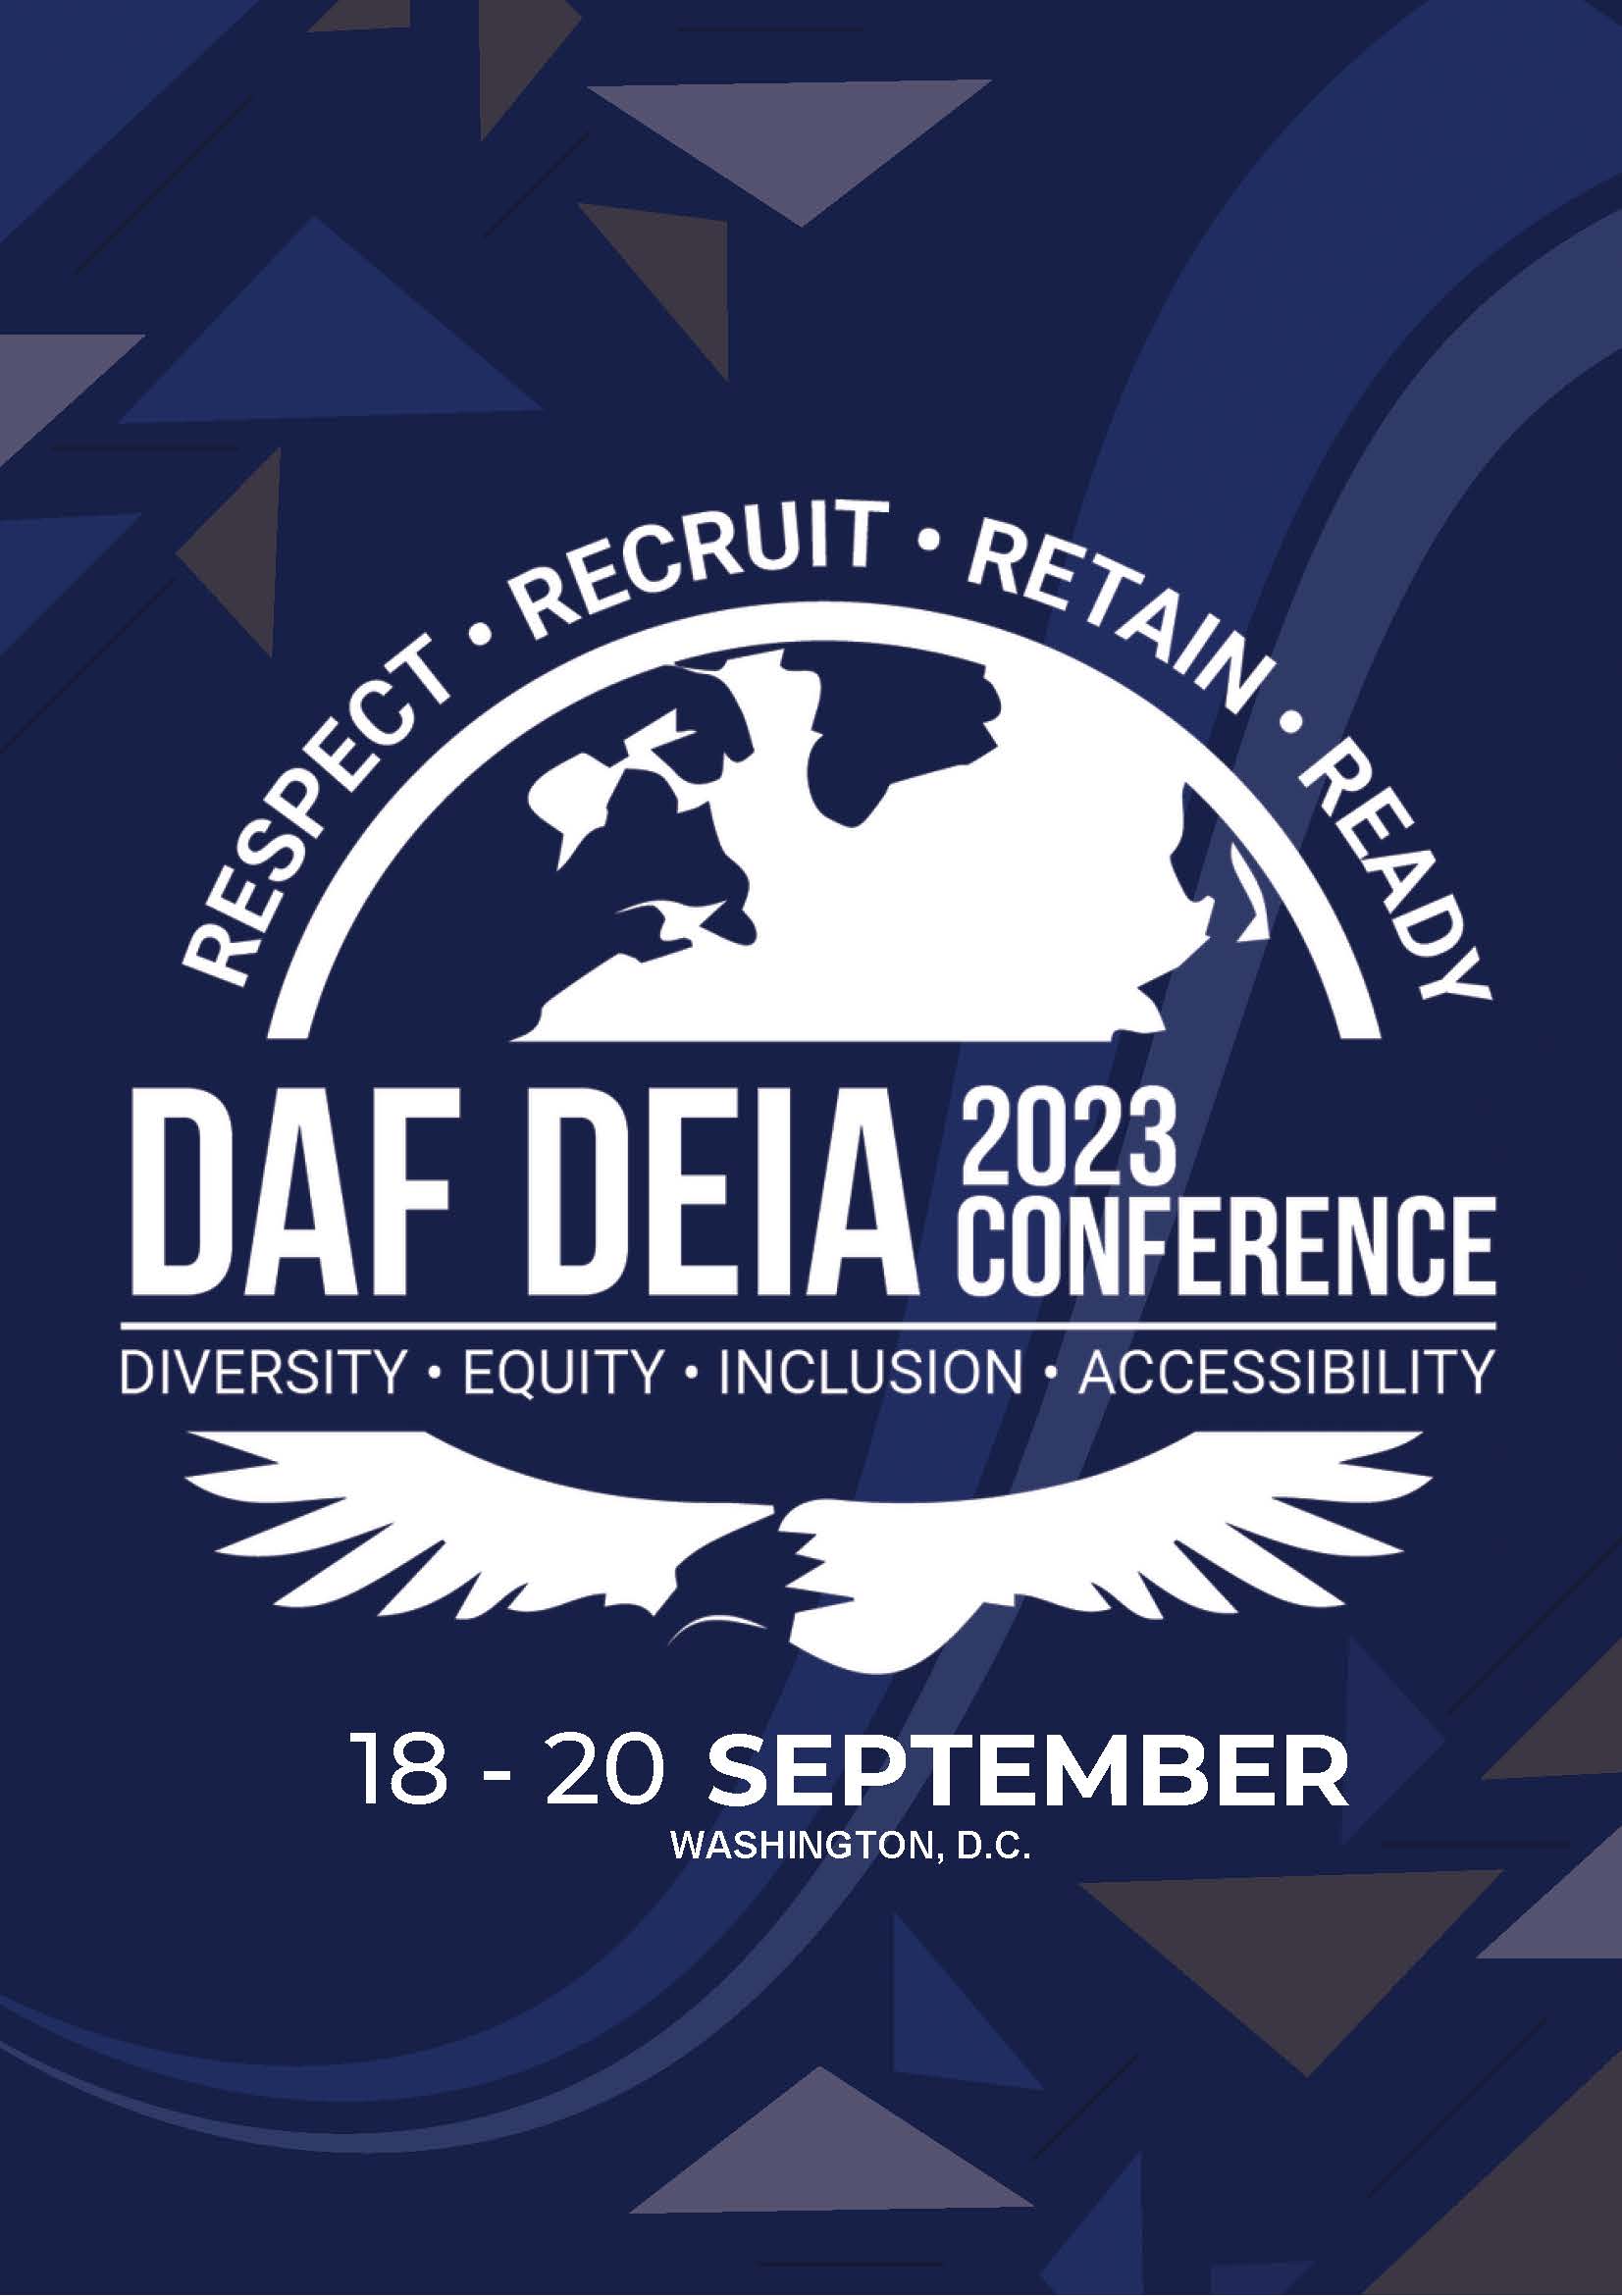 DAF DEIA Conference 2023